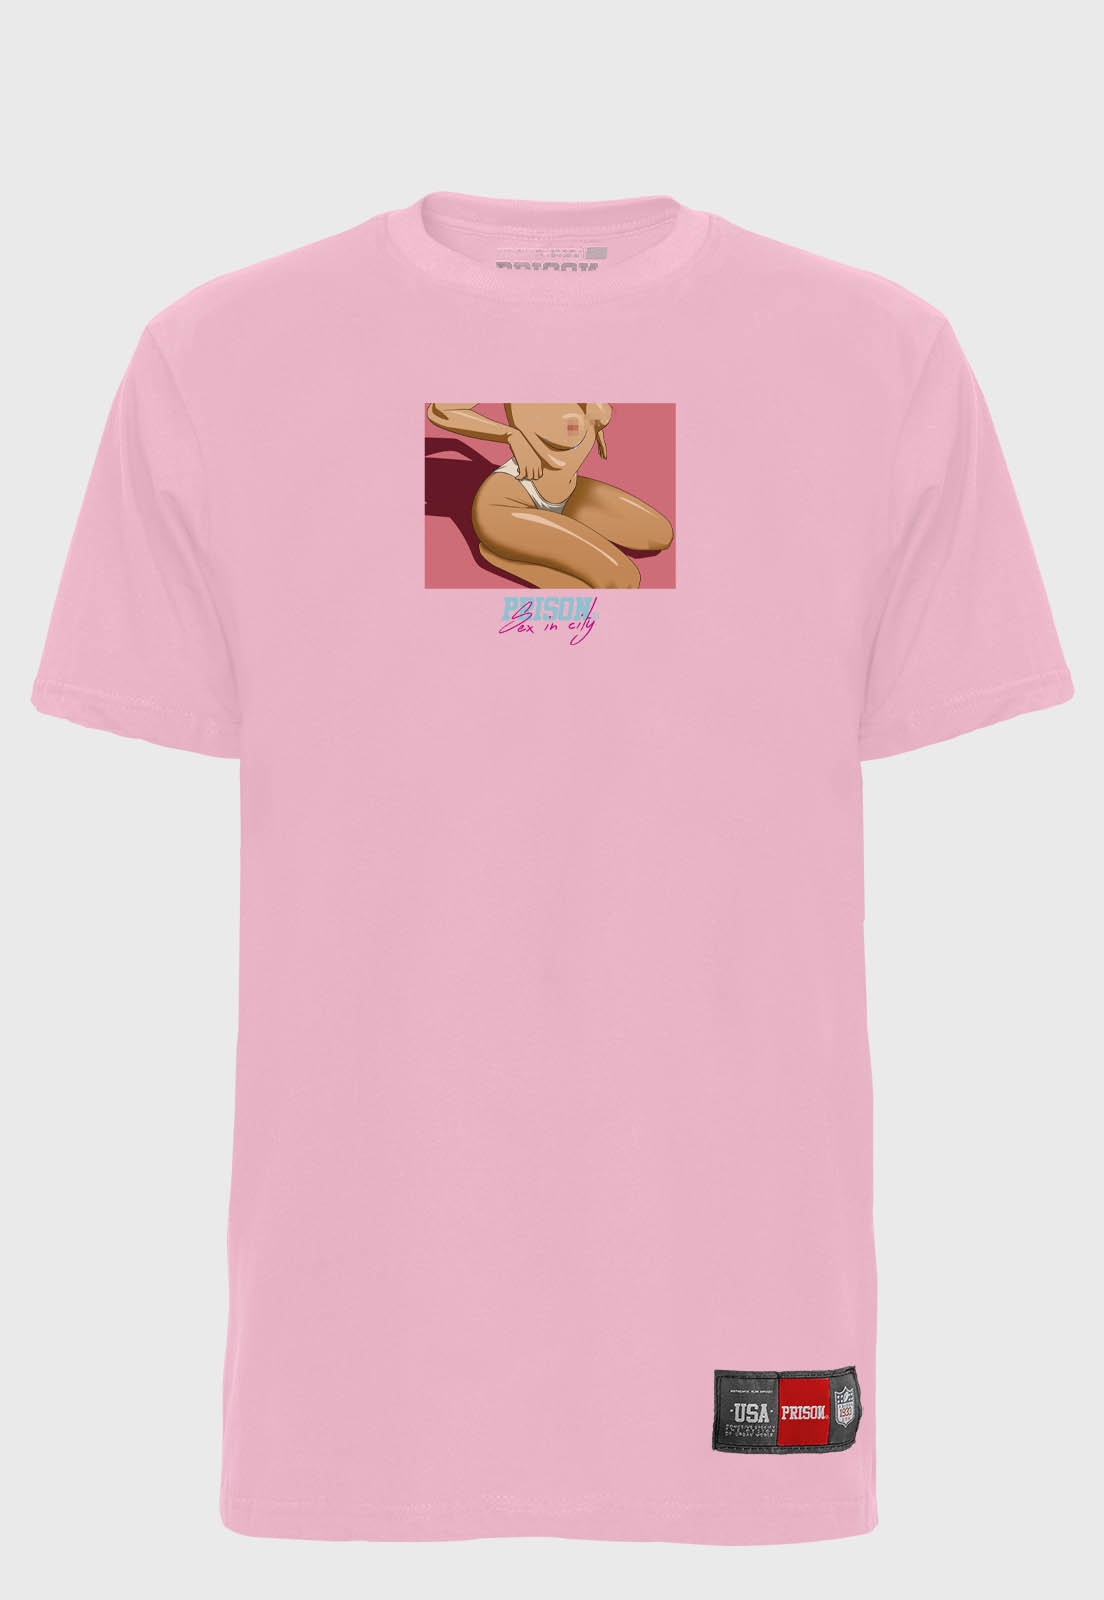 Camisa Streetwear Prison Pink Sex in city